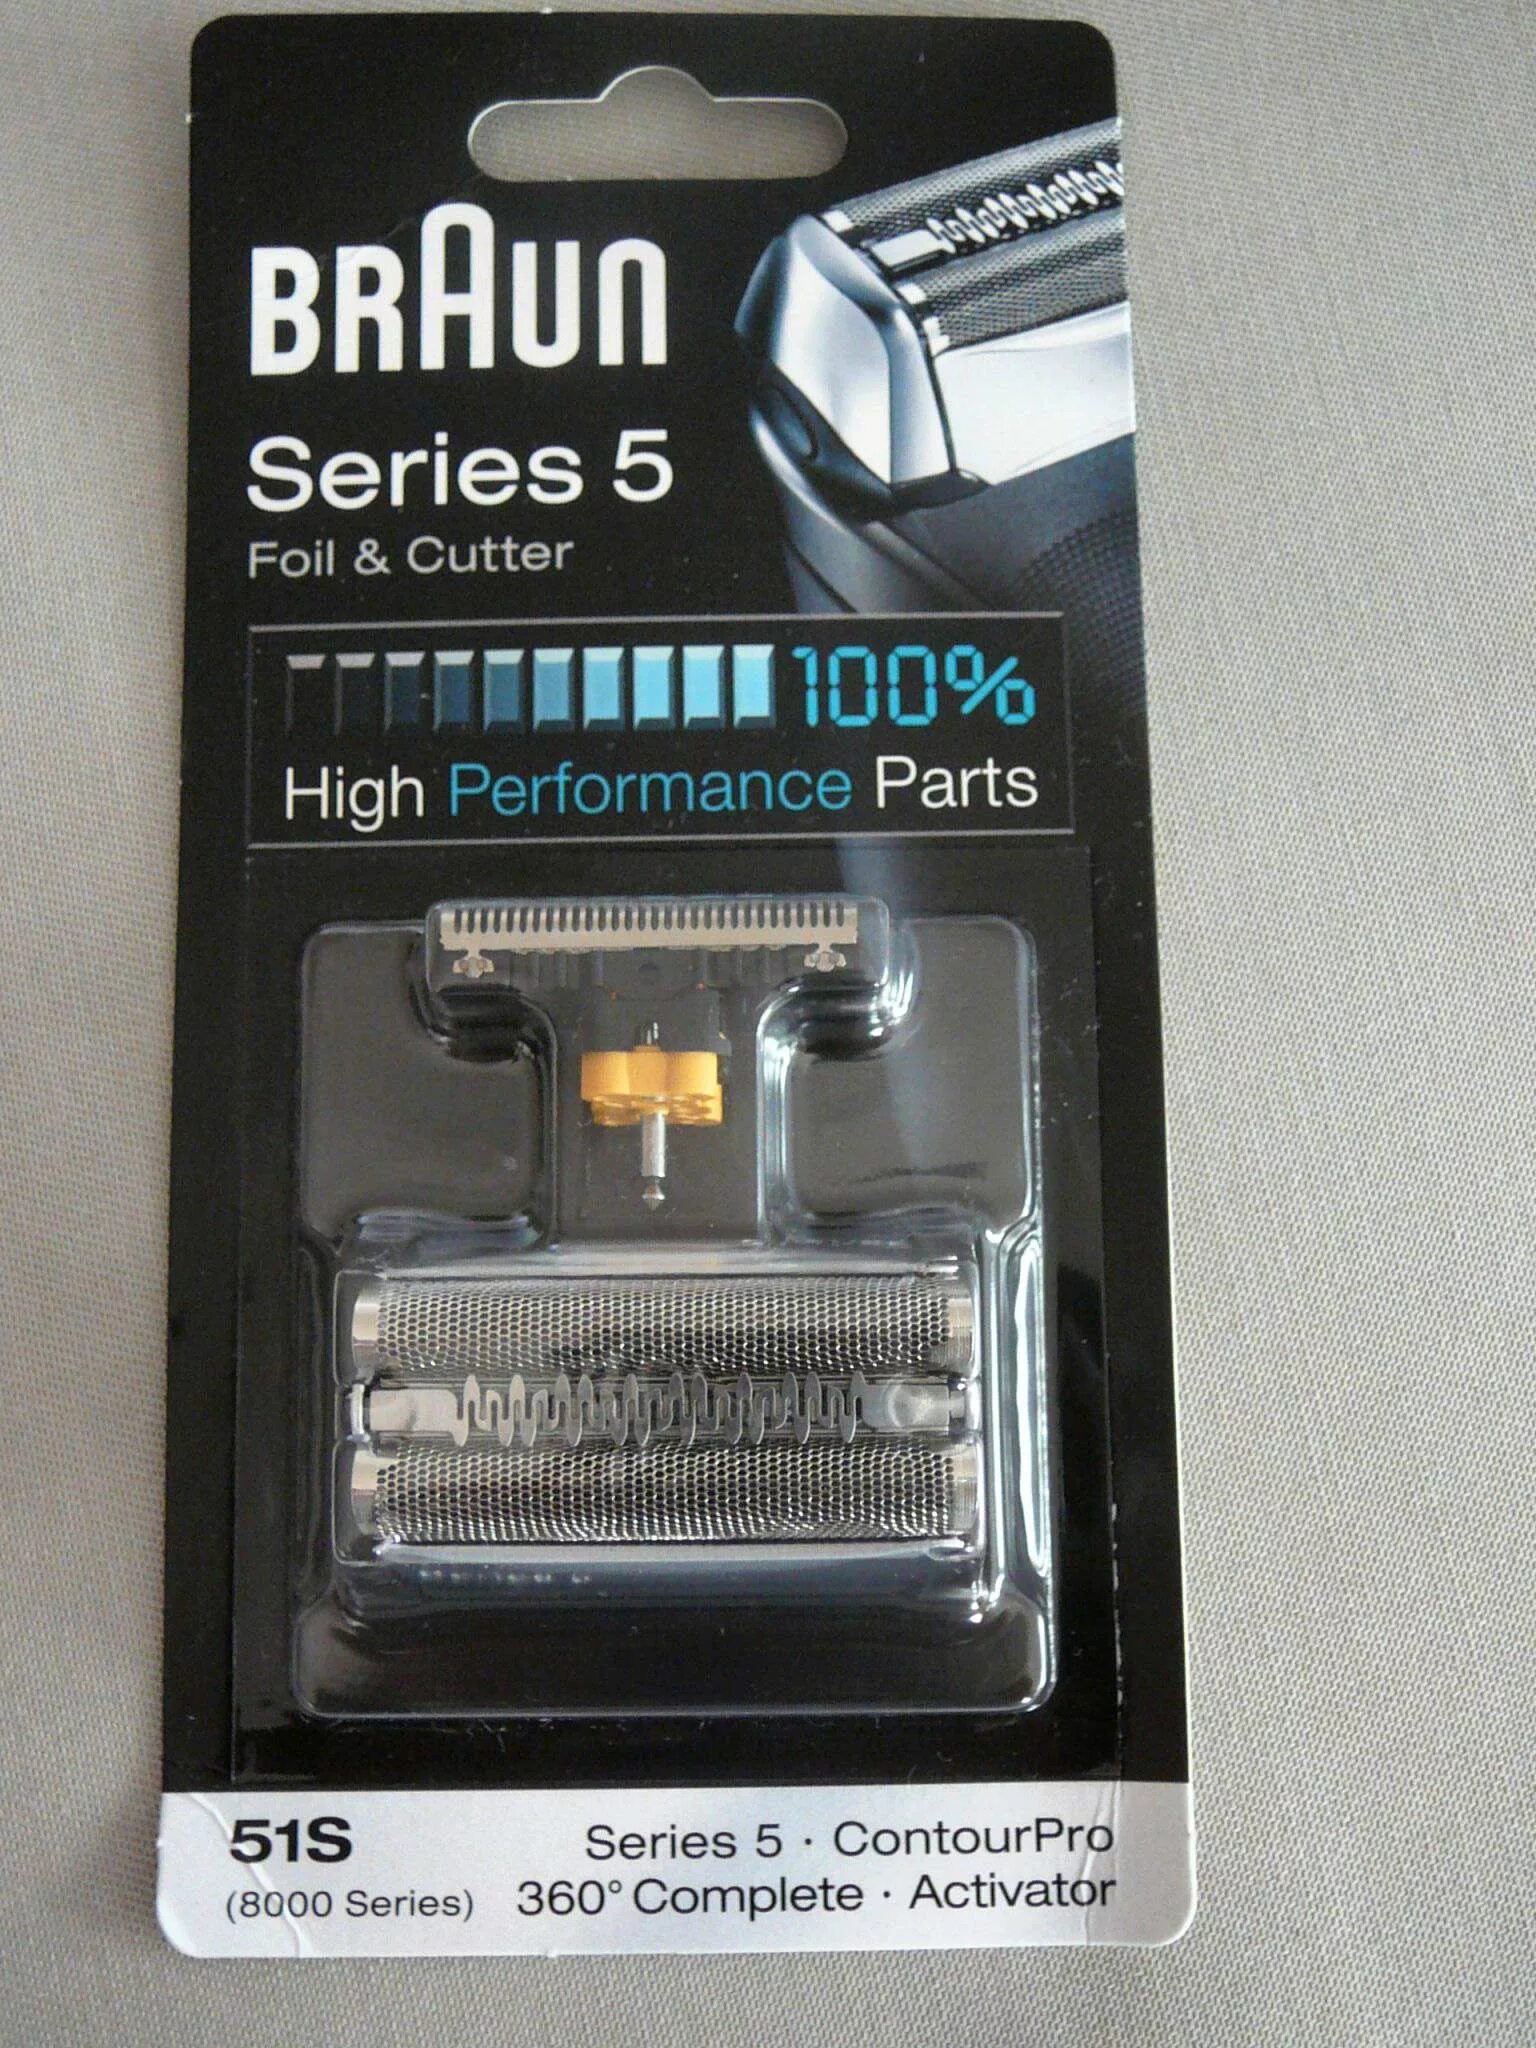 Сетка braun series 5. Braun Series 5 51s. Braun 360 complete сетка. Сетка для бритвы Braun 360 complete. Зарядный провод для бритвы Браун 51s активатор.